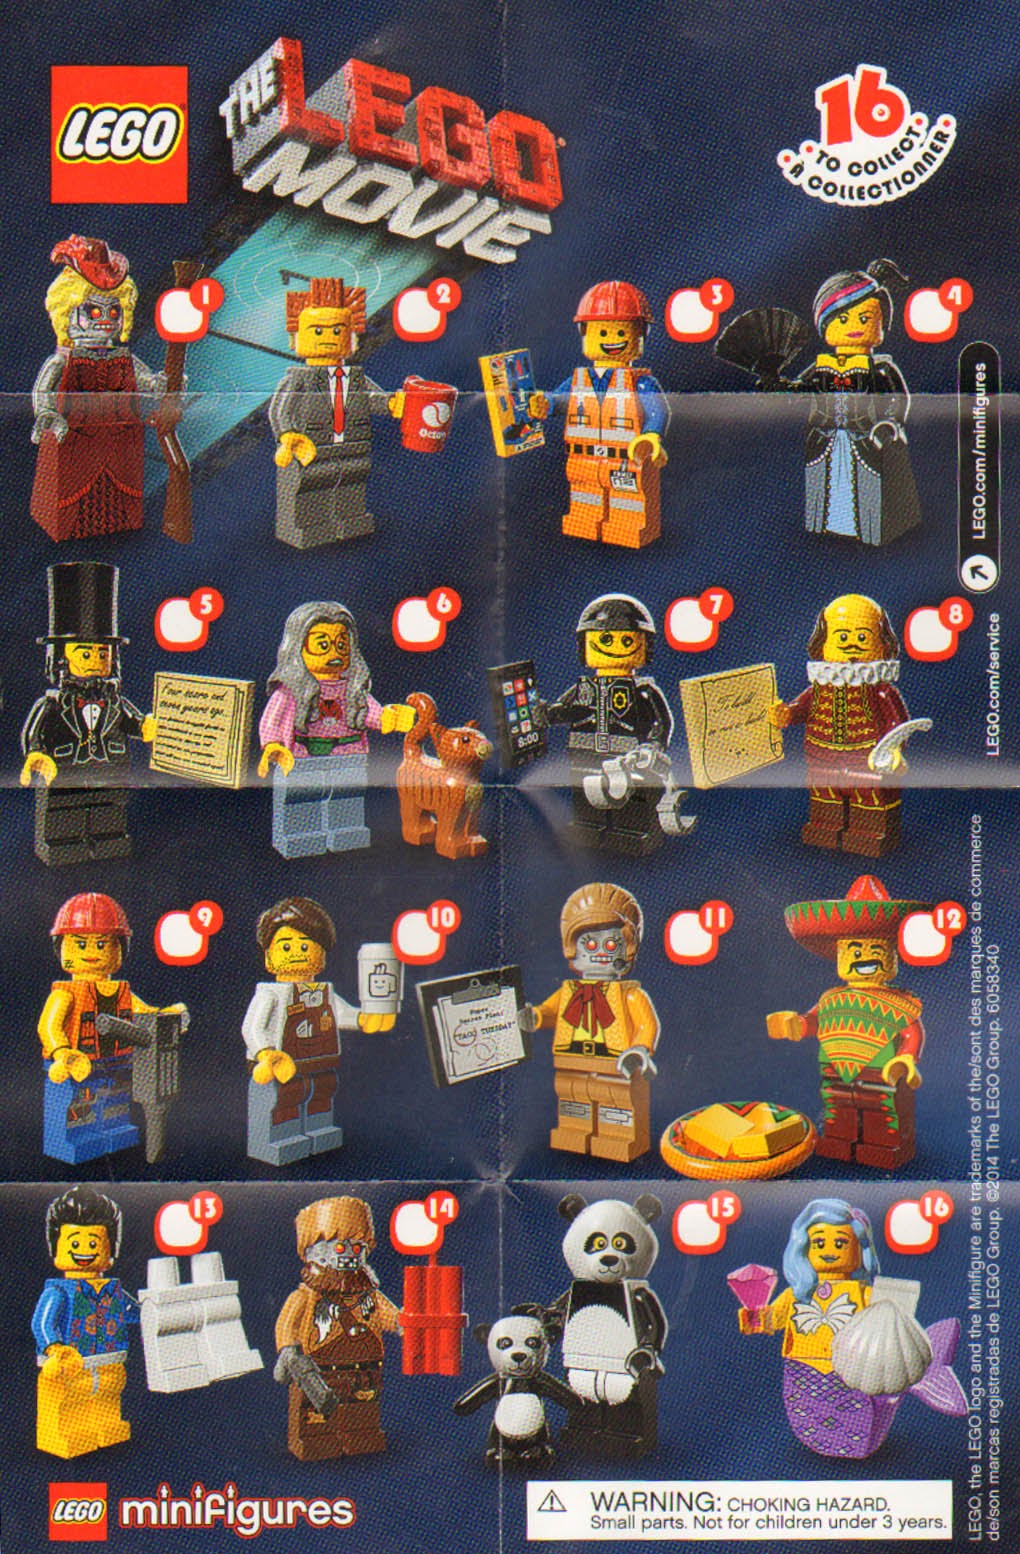 The Minifigure Collector: Lego Minifigure Series 1 -19, Ninjago Movie, Batman Movie Series 1 and 2, Lego Simpson, Disney, Harry Potter, DC Superheroes - Checklists Visual Guides